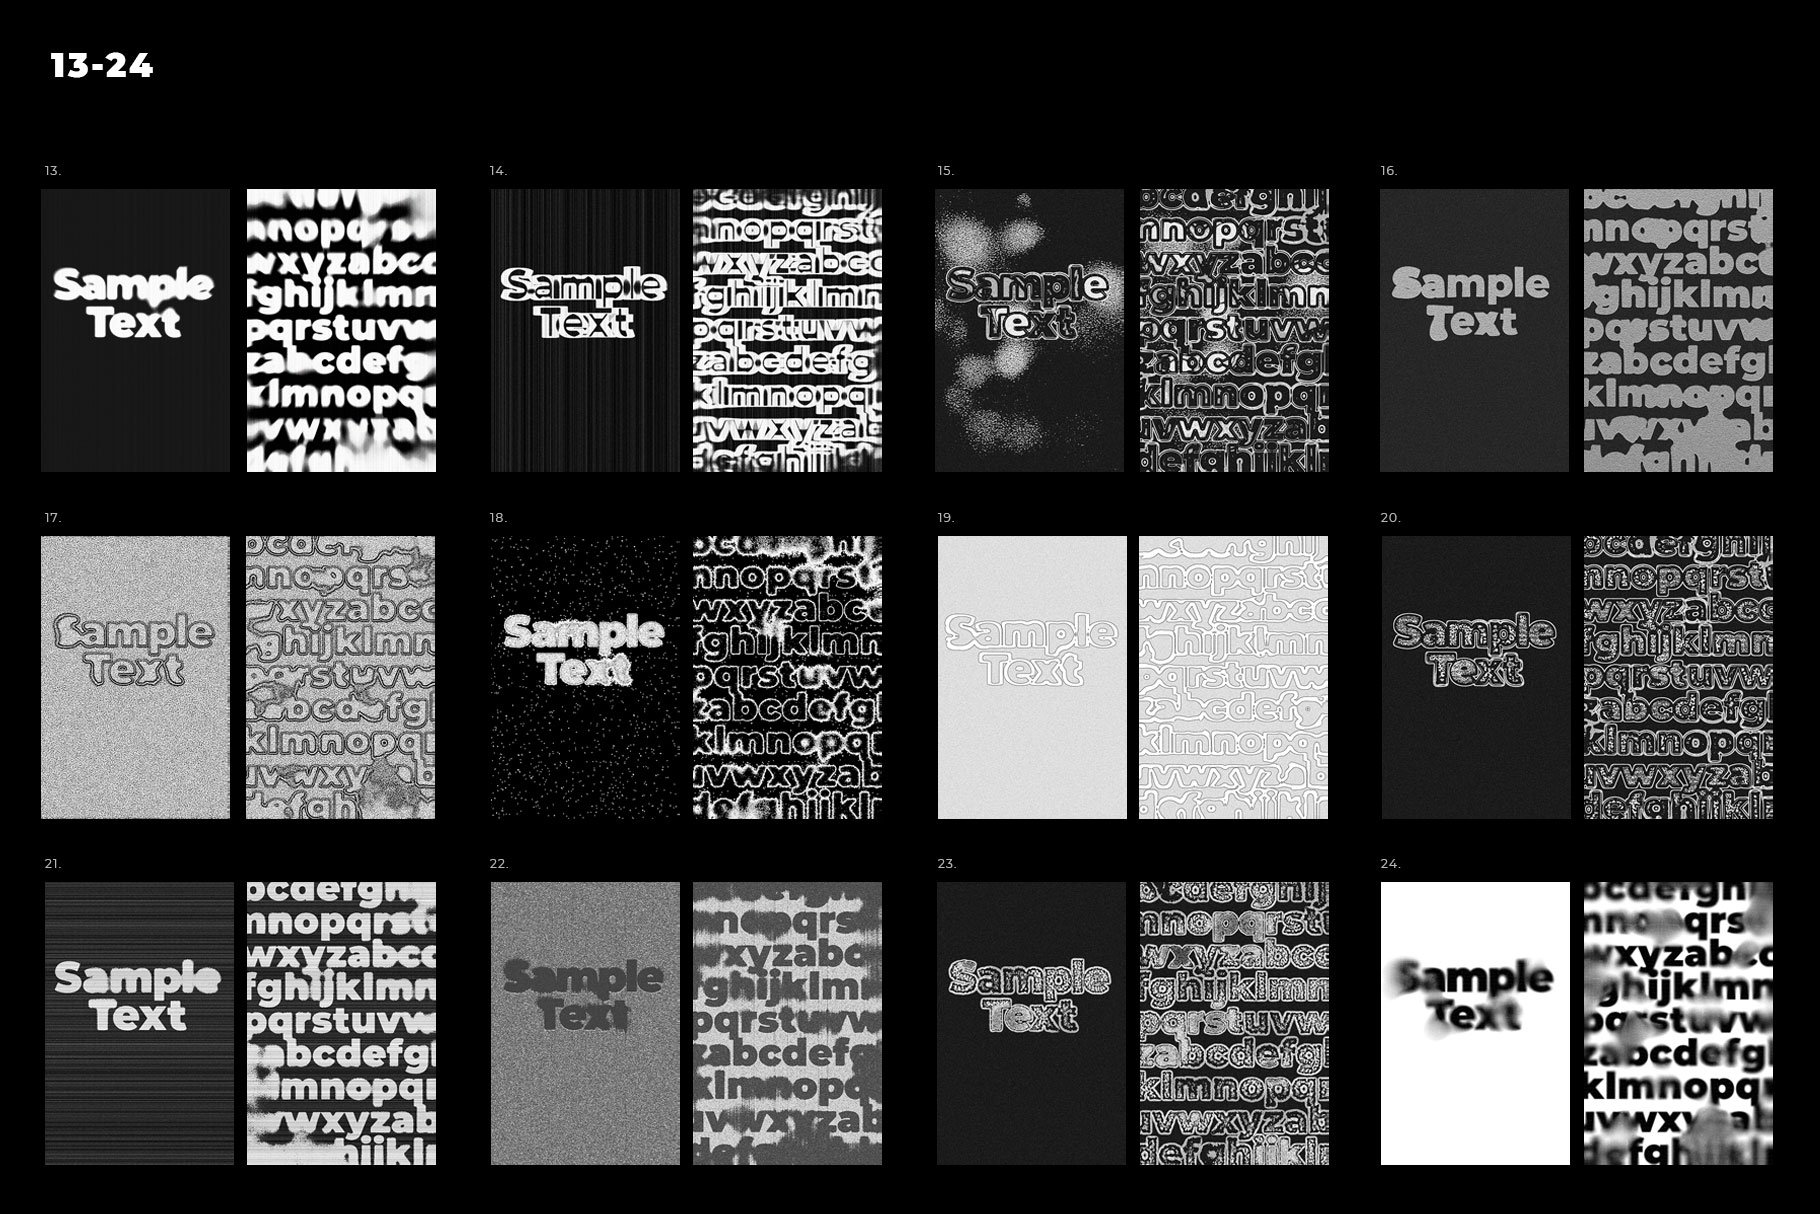 Inartflow 40种艺术抽象失真故障扭曲印刷艺术海报设计复古文字效果 40 Photoshop Text Effects Vol.2 图片素材 第4张